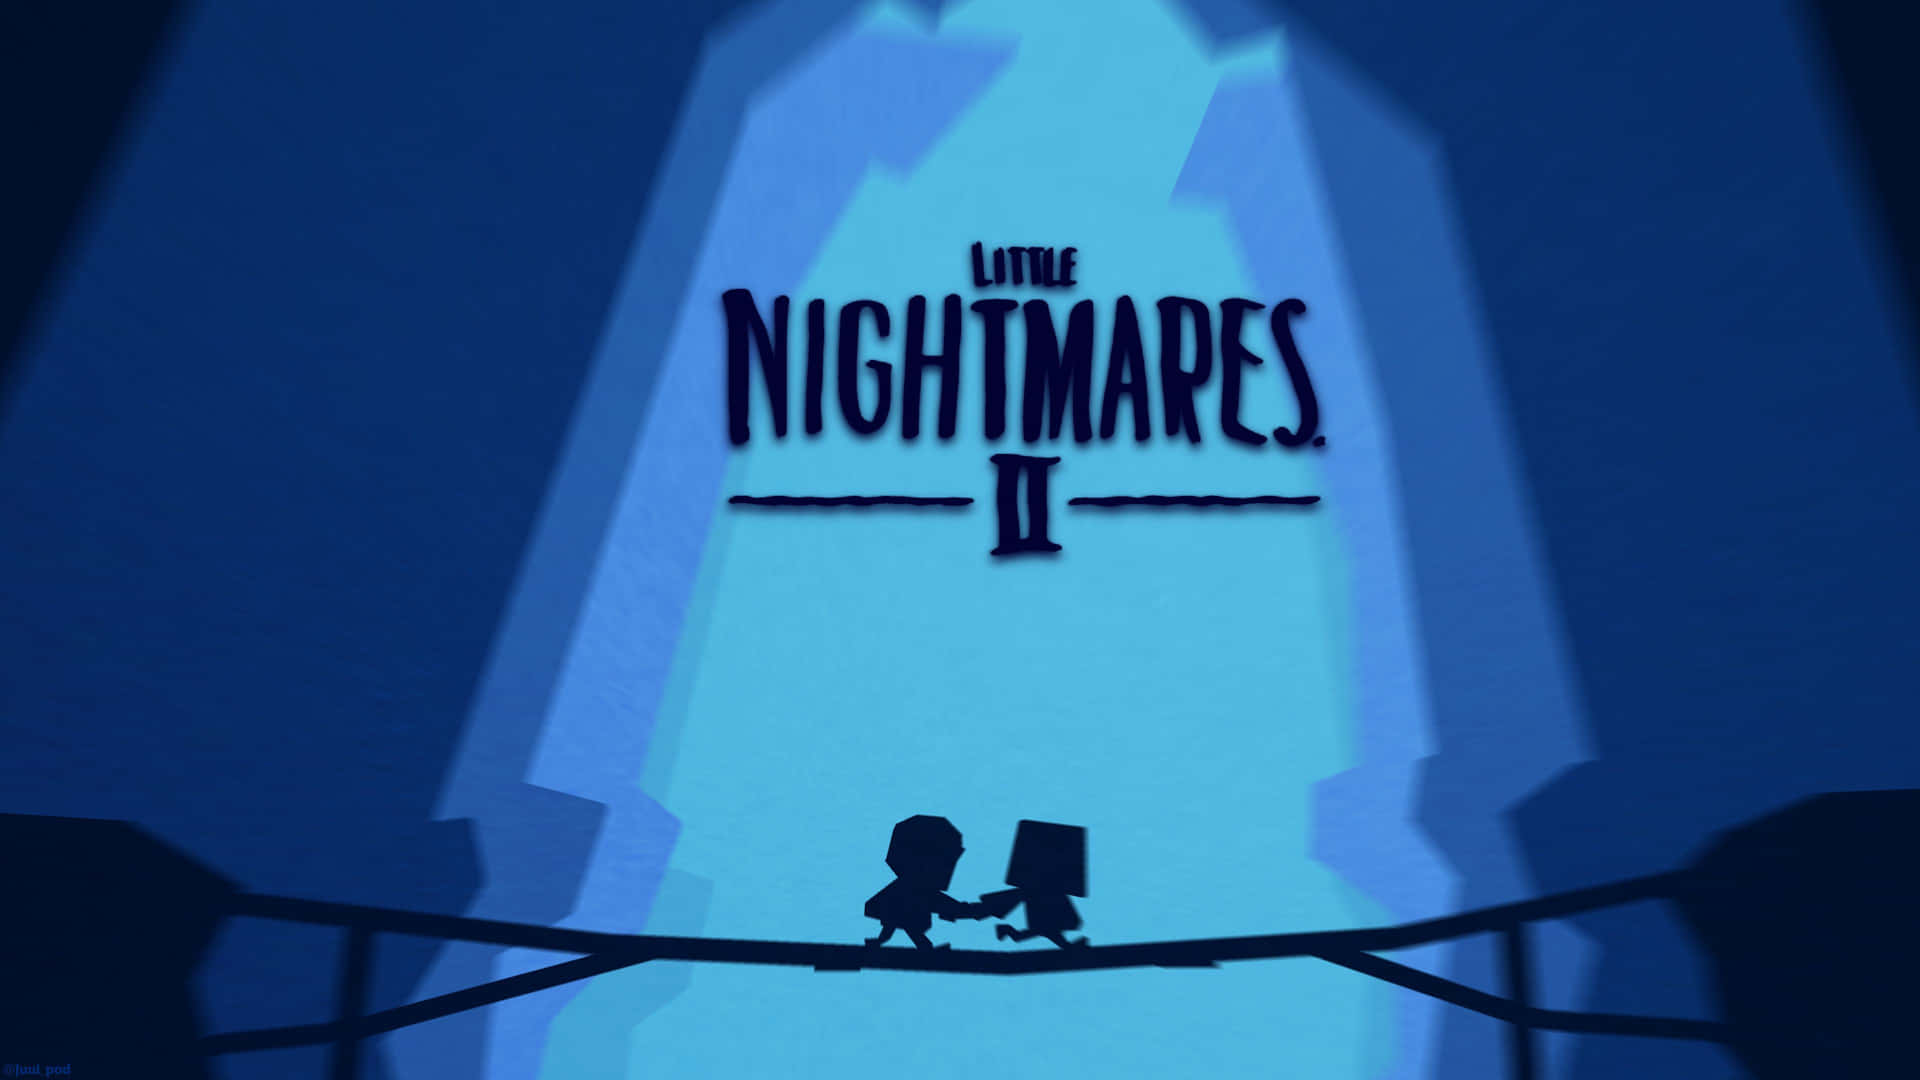 Littlenightmares Ii - Hintergrundbild Wallpaper